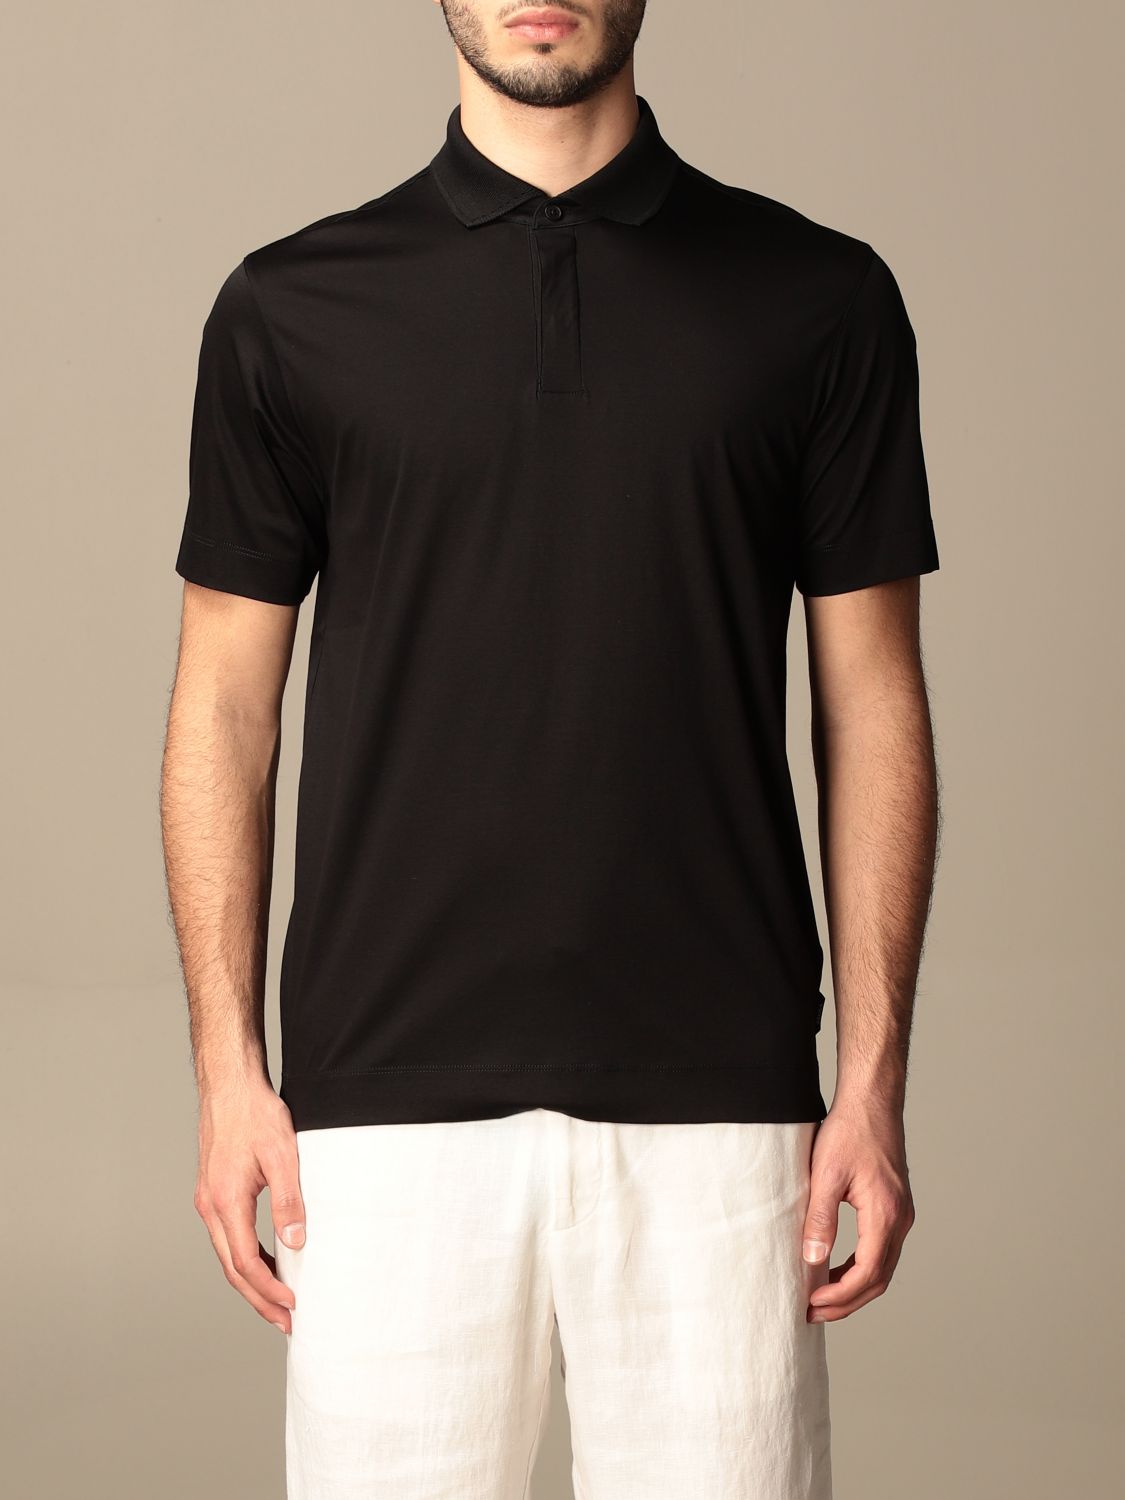 Z ZEGNA: basic polo shirt in cotton jersey - Black | Z Zegna polo shirt ...